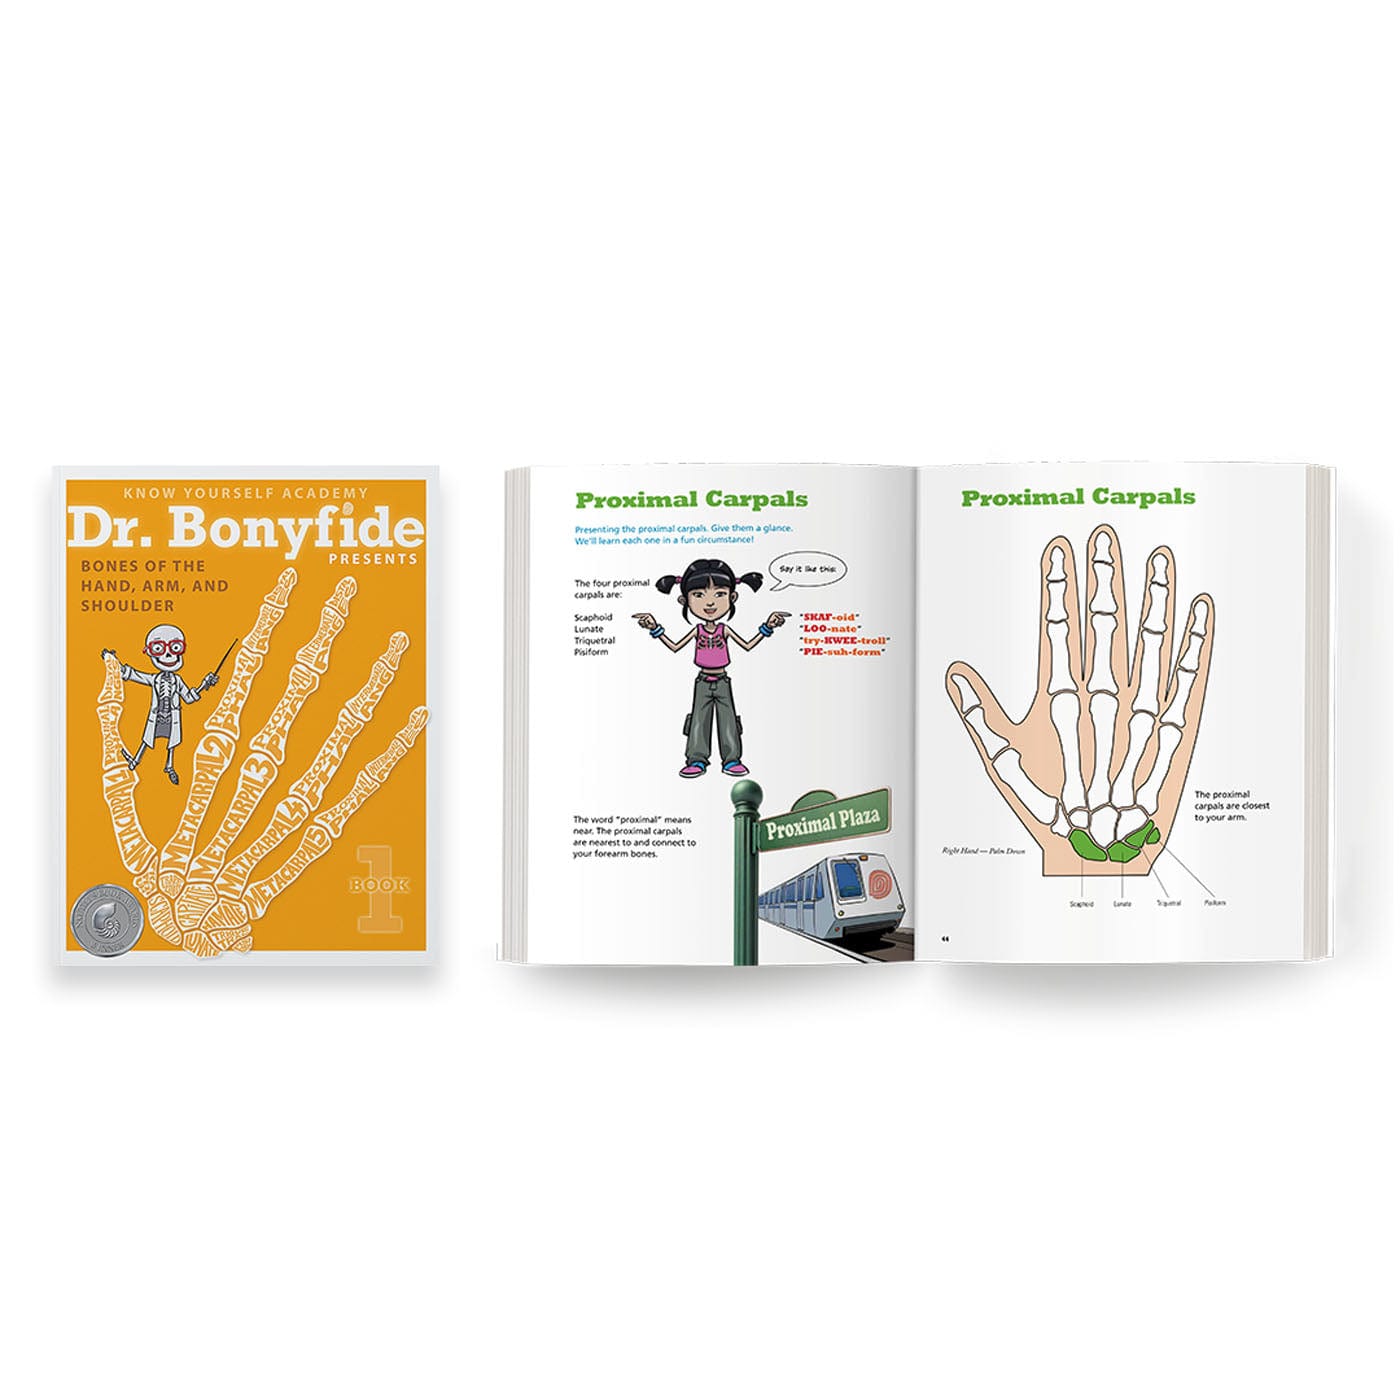 206 Bones of the Human Body - 4 Book Set Health Education for Children